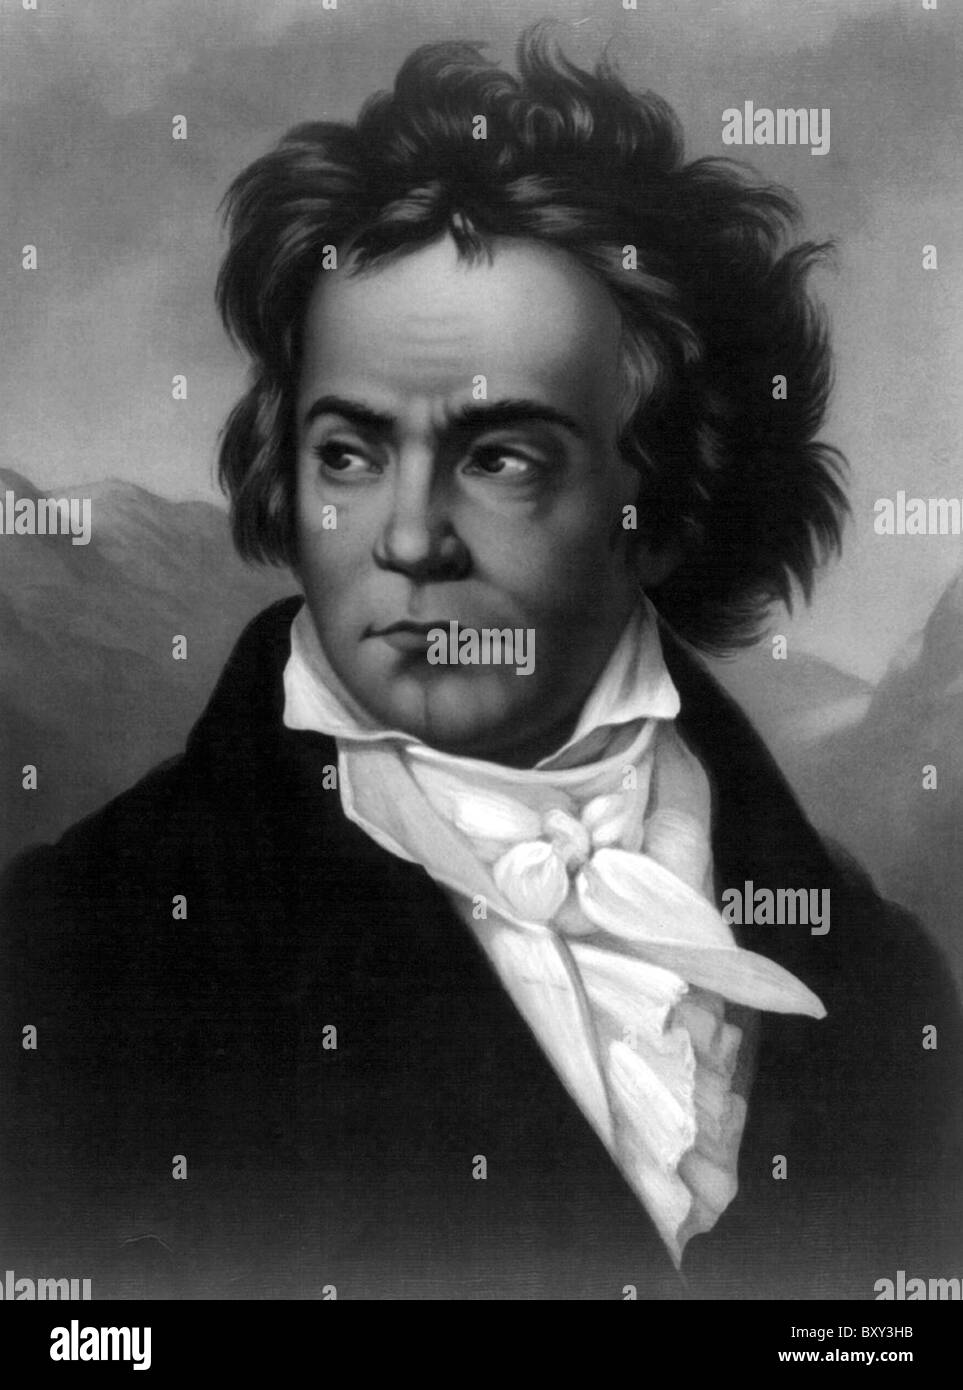 Beethoven, Ludwig van Beethoven, compositeur et pianiste allemand. Banque D'Images